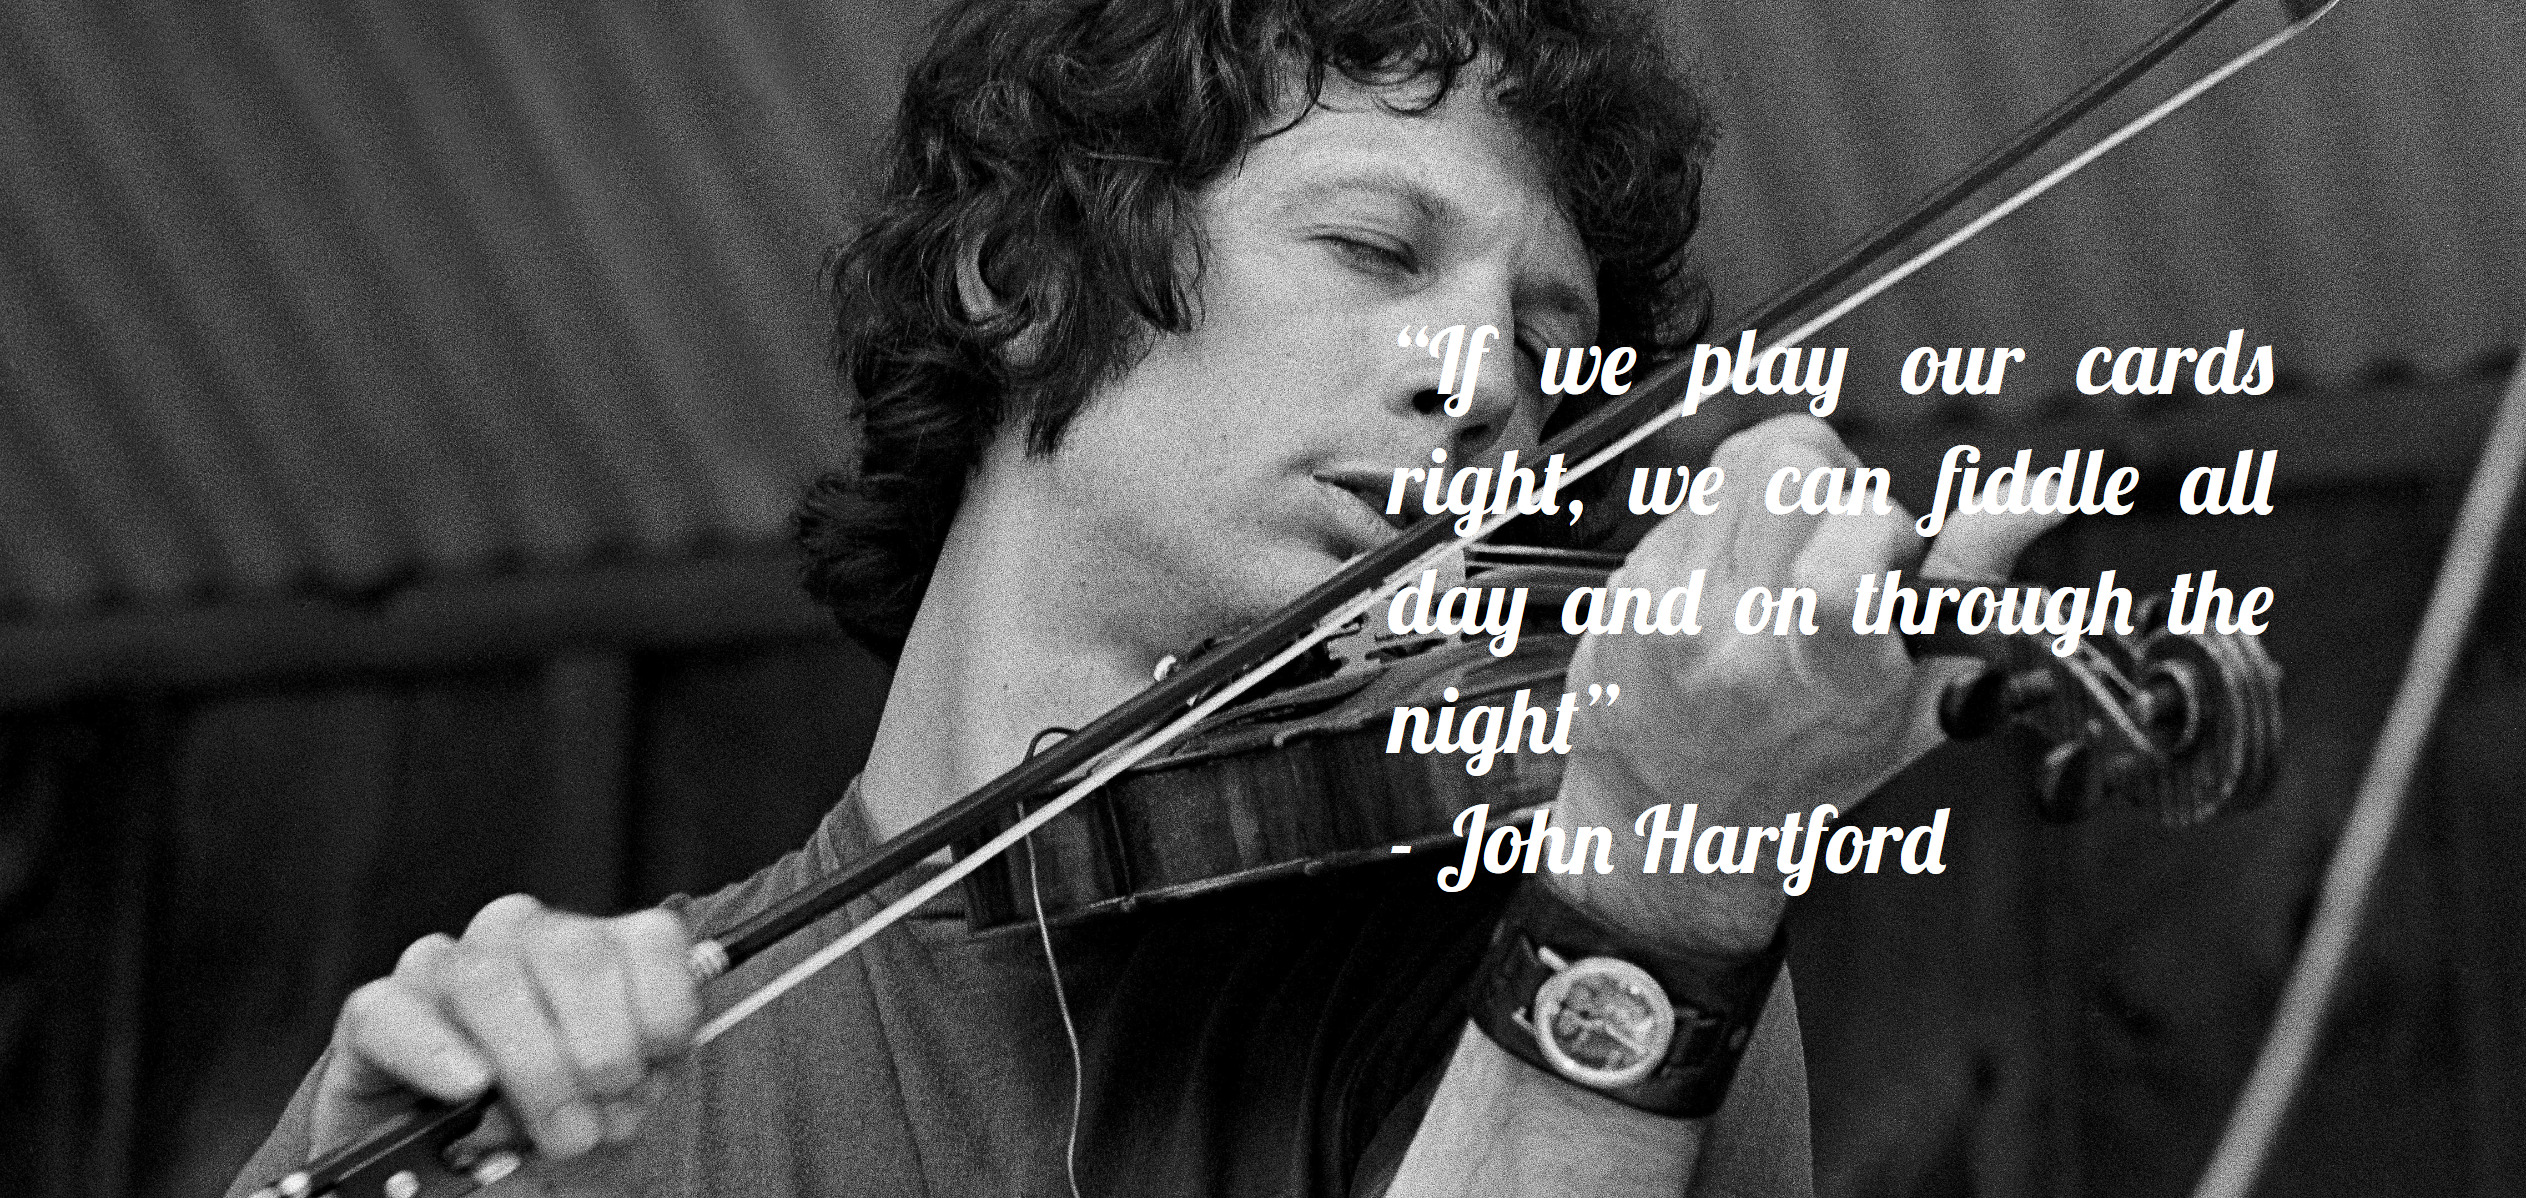 The John Hartford Fiddle Tune Project